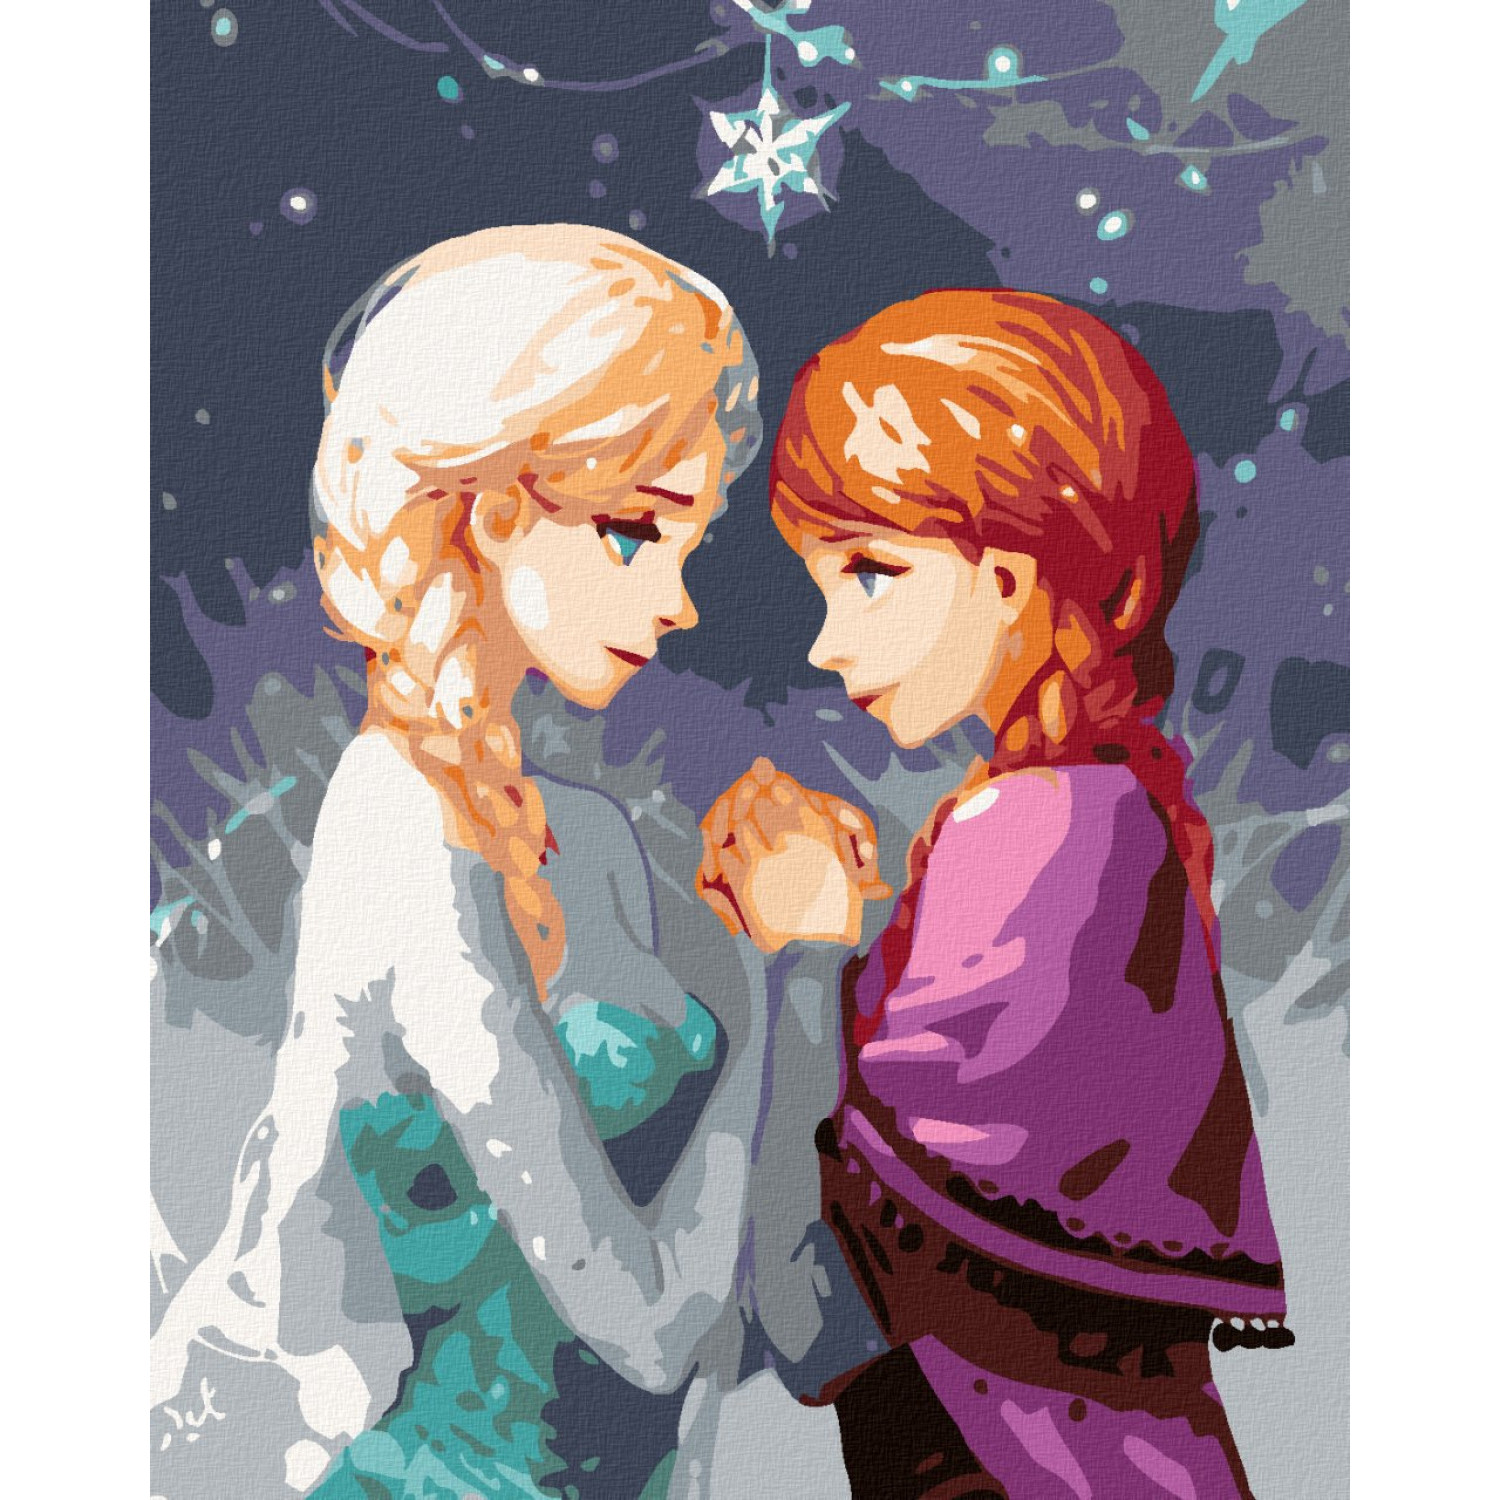 Рисуване по номера Frozen - Елза и Анна, с подрамка, 40х50 см.